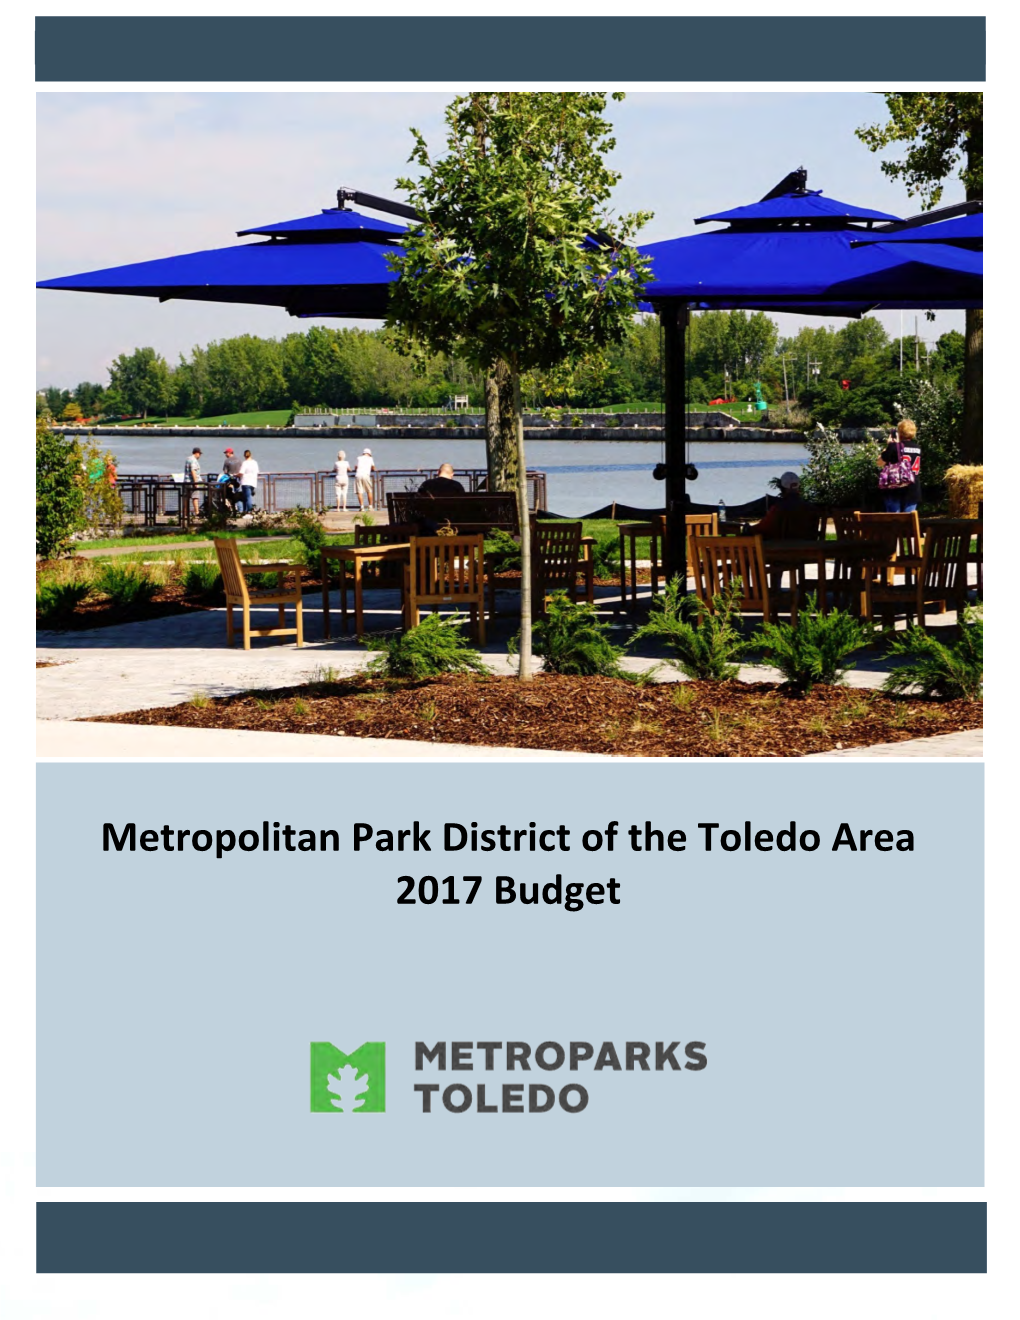 Metropolitan Park District of the Toledo Area 2017 Budget